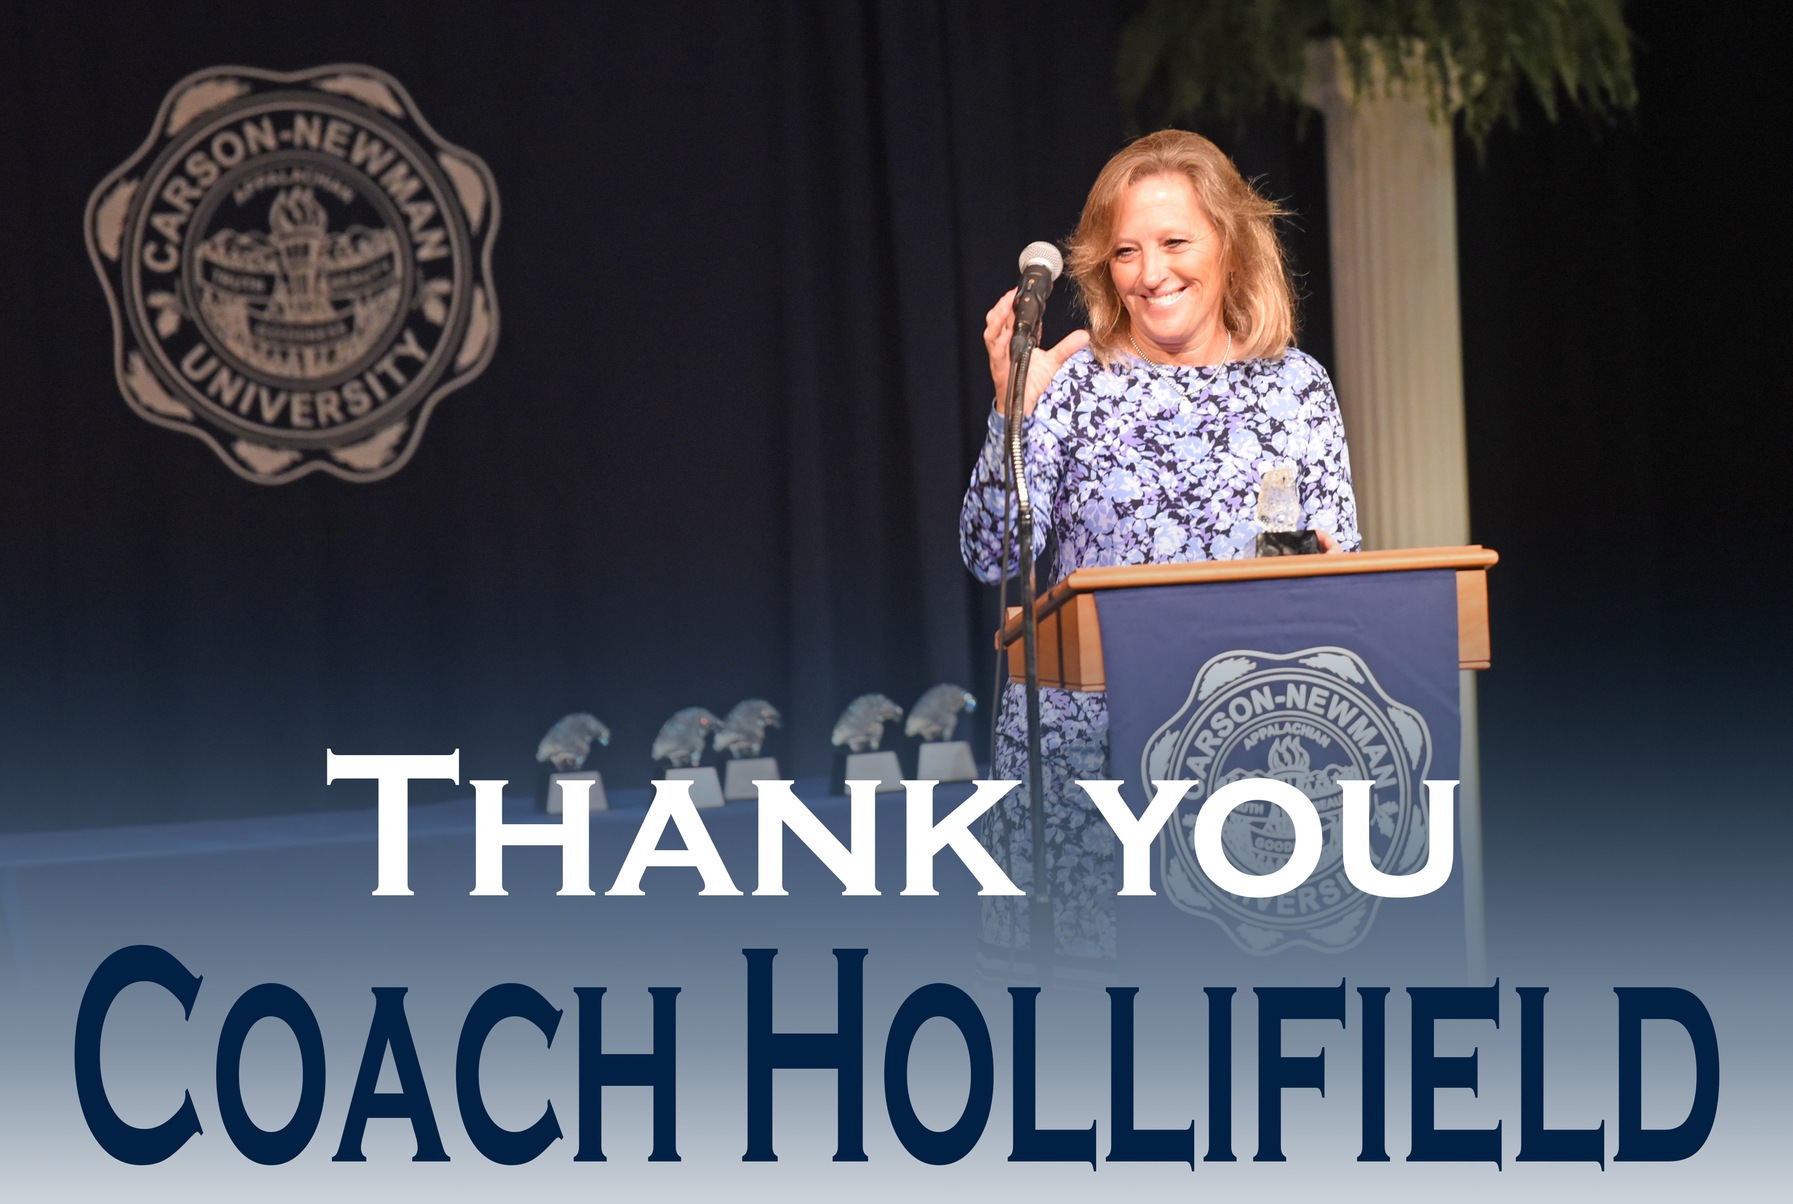 Hall of Fame Softball Coach Kazee-Hollifield announces retirement